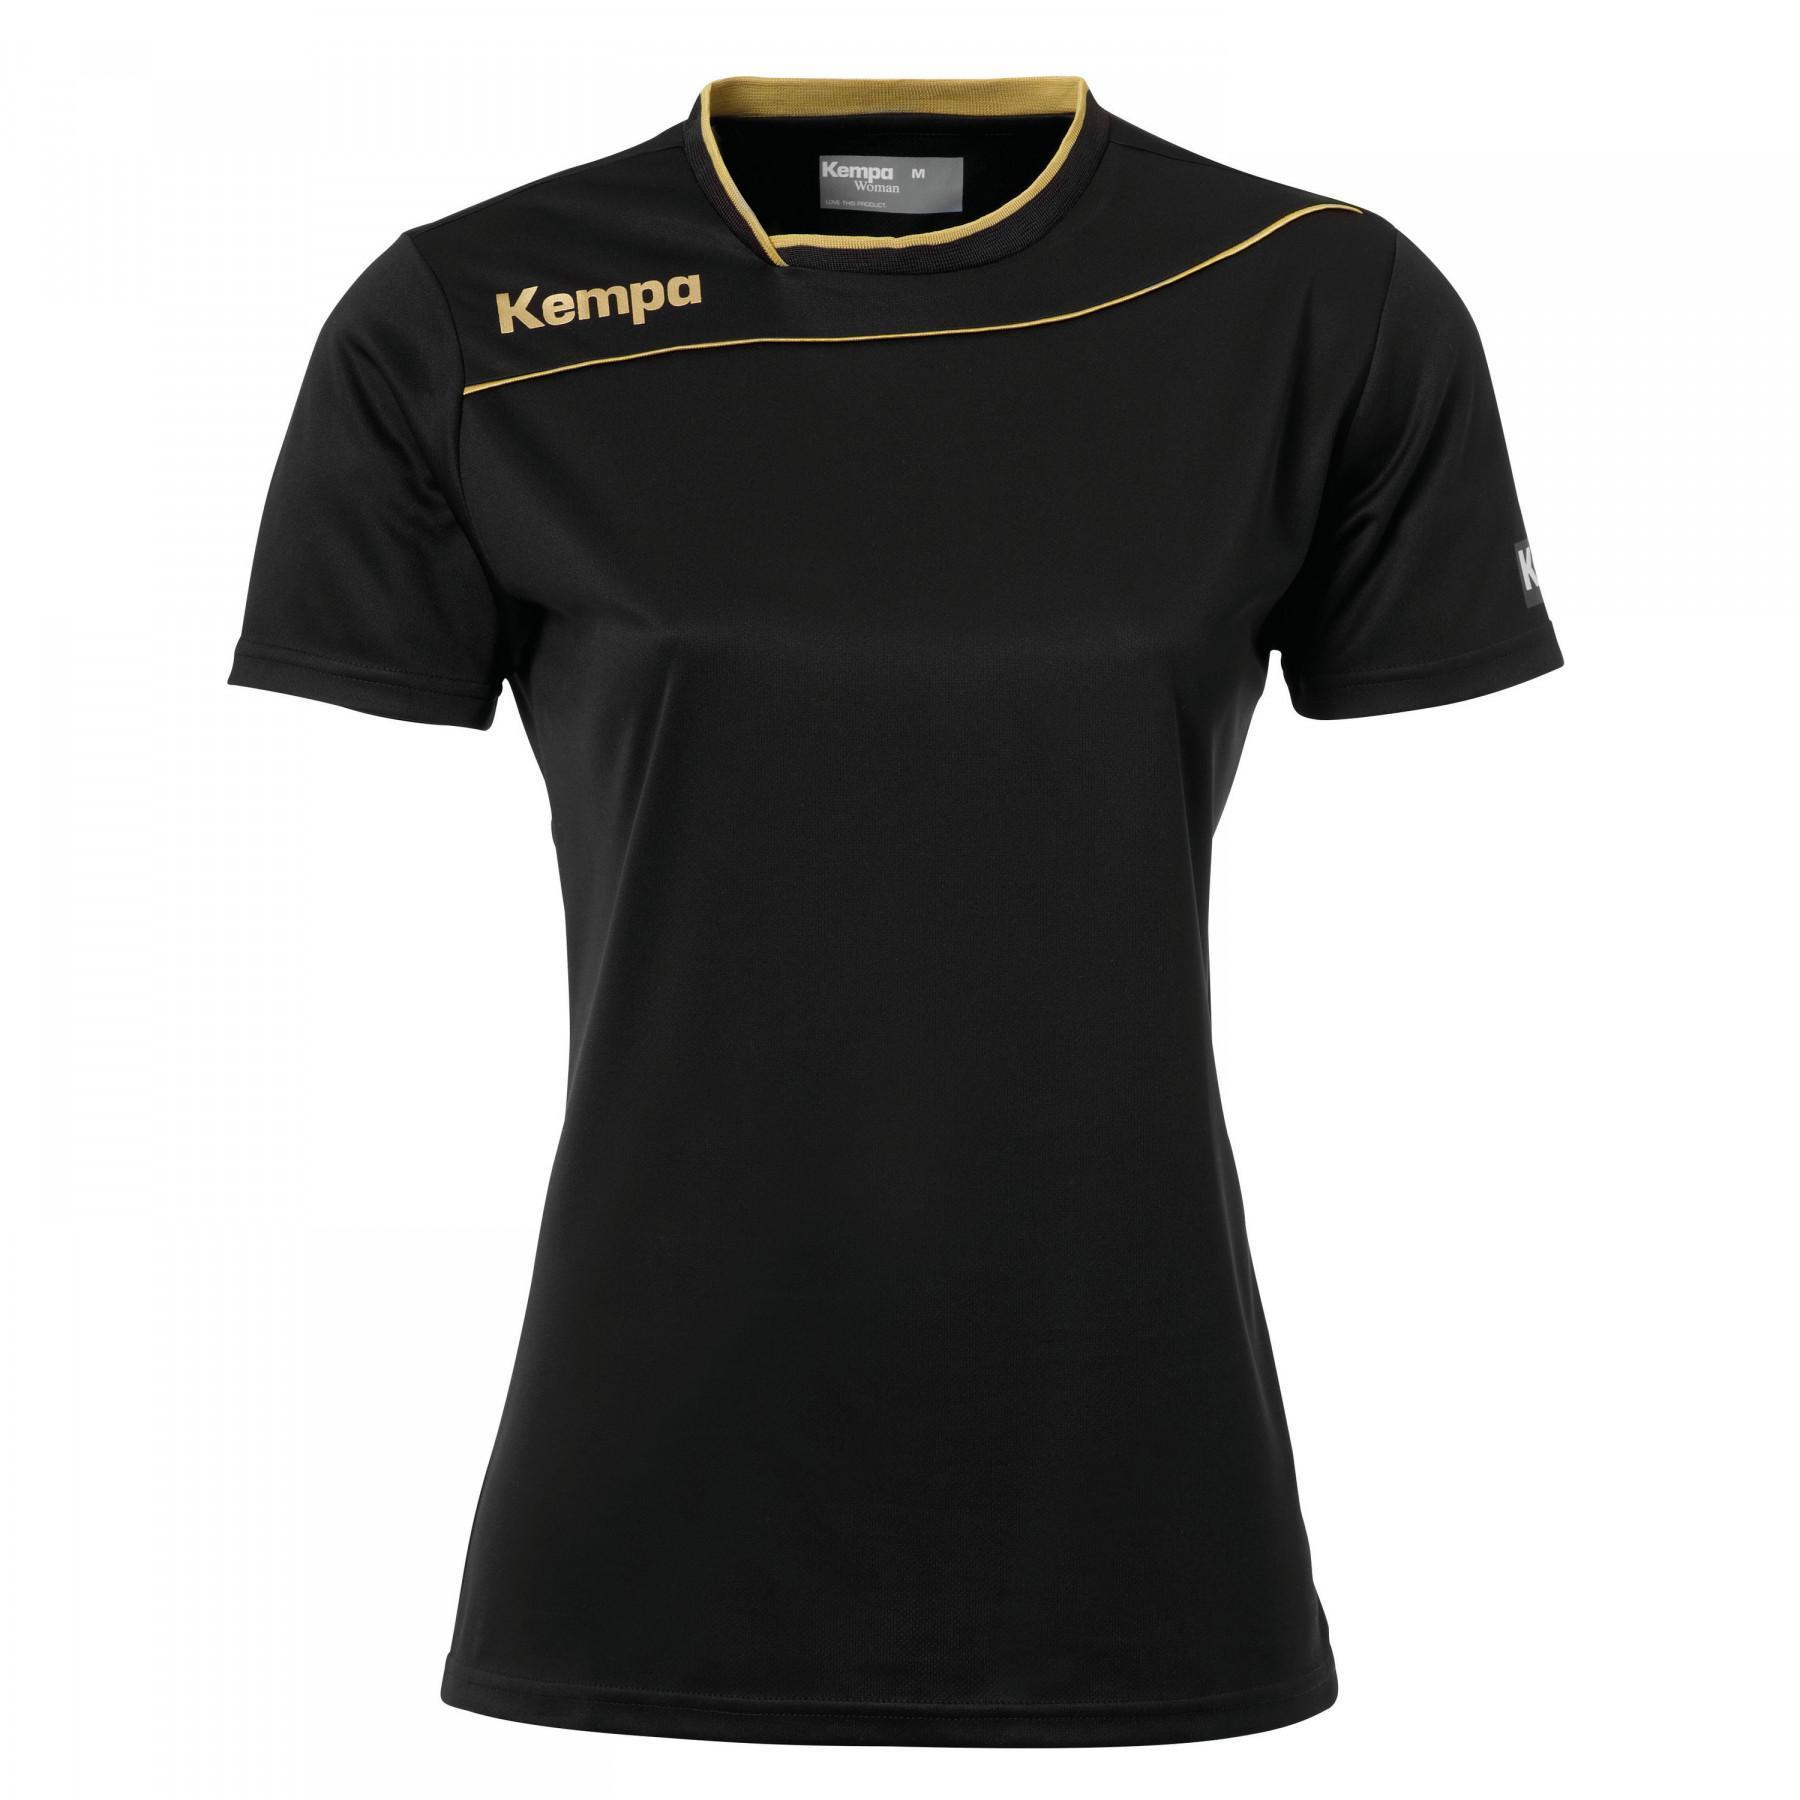 Women's jersey Kempa Gold